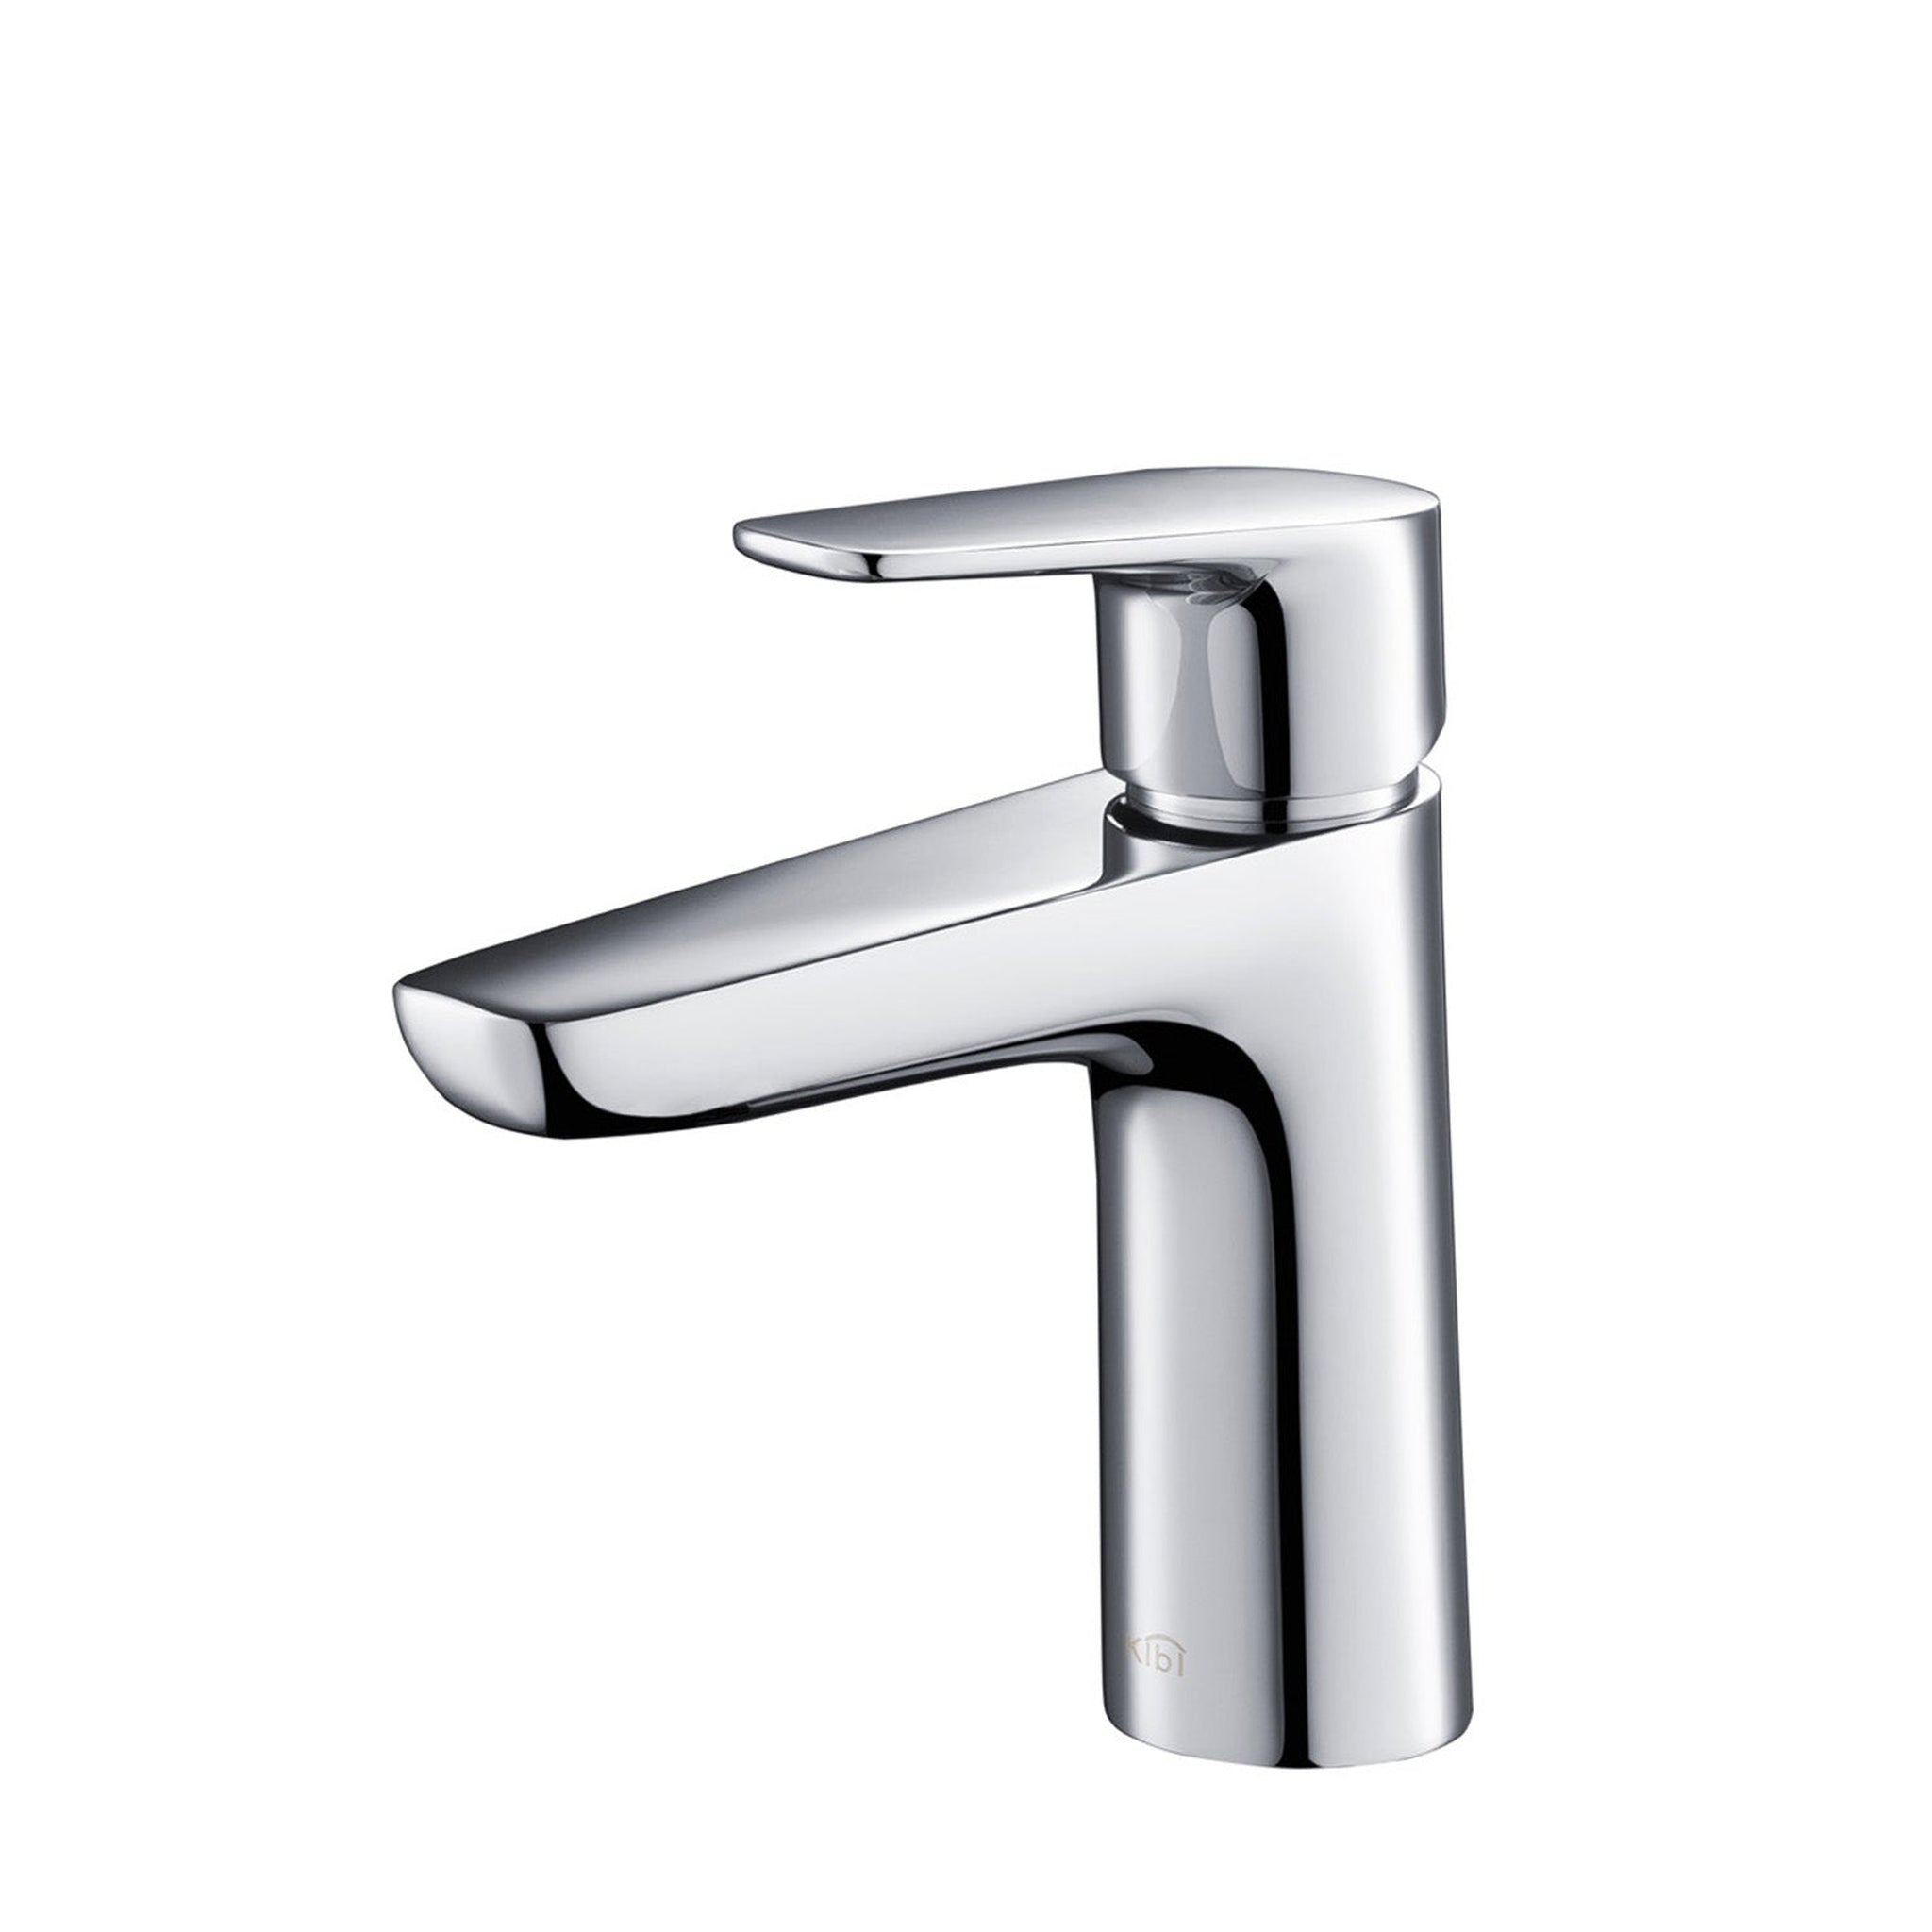 KIBI, KIBI Harmony Single Handle Chrome Solid Brass Bathroom Sink Faucet